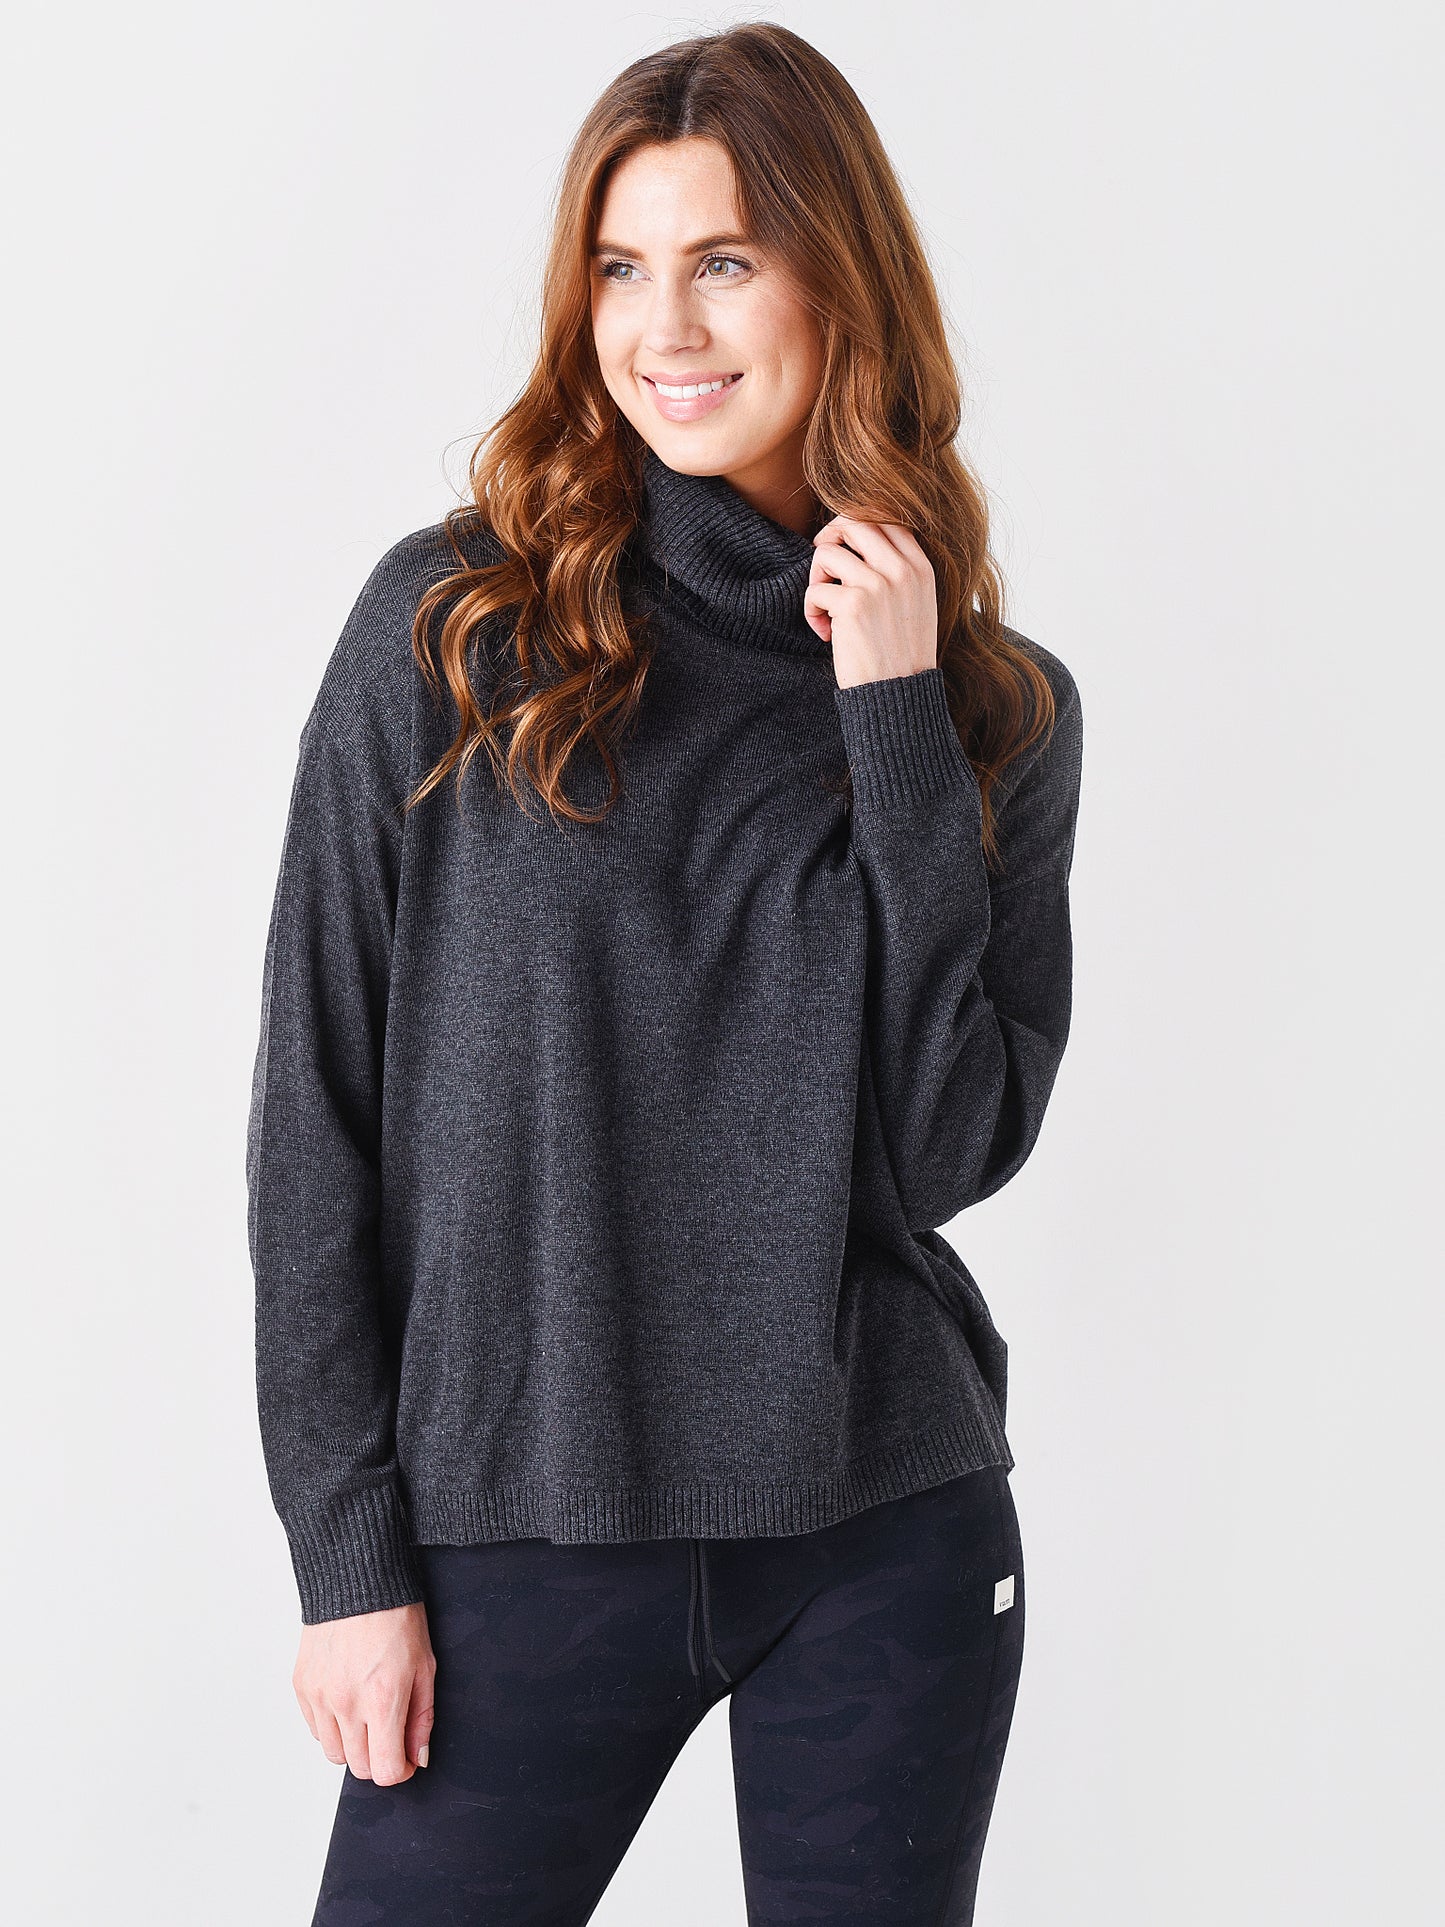 Z Supply Women's Agnes Turtleneck Sweater